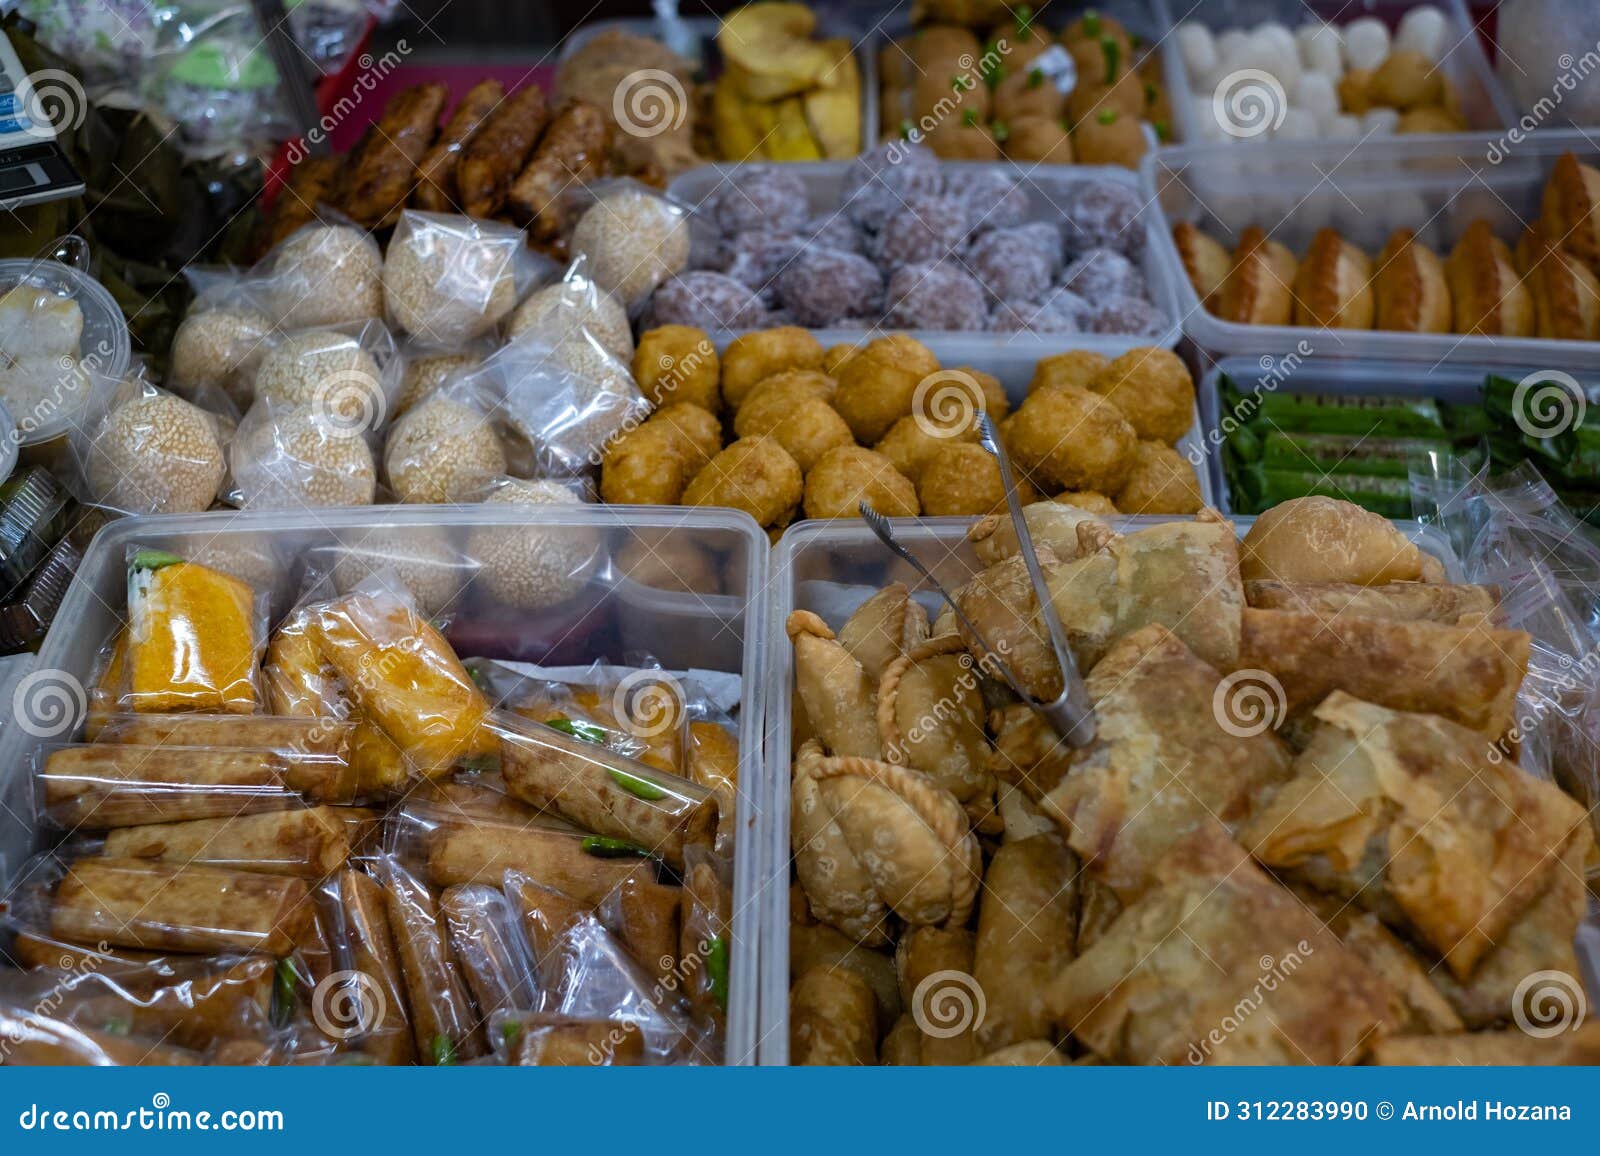 jajan pasar, display of traditional snacks in indonesian wet market